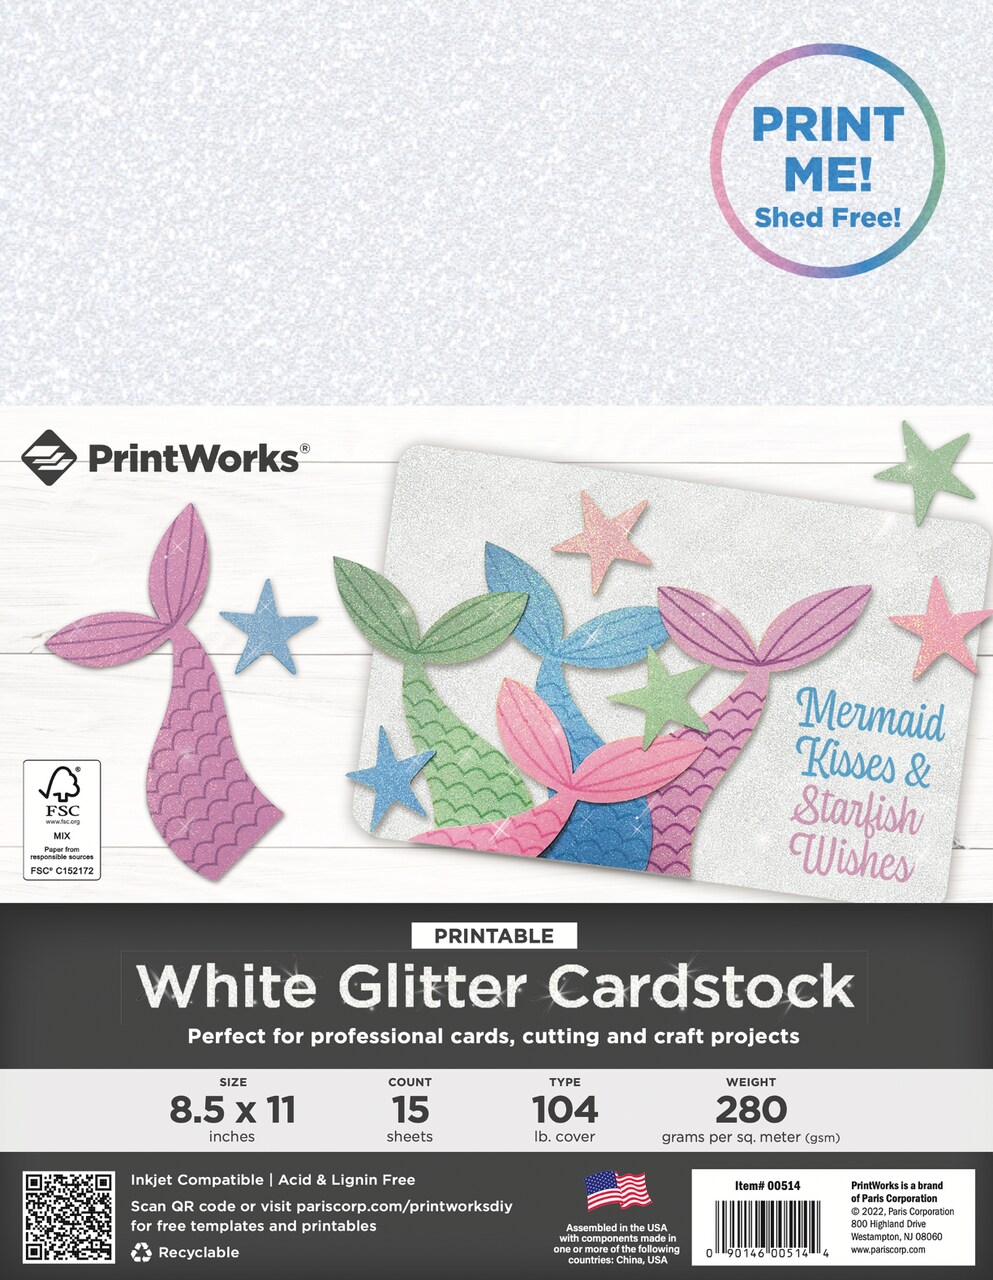 Printworks Printable White Glitter Cardstock, 15 Sheets, 8.5” x 11